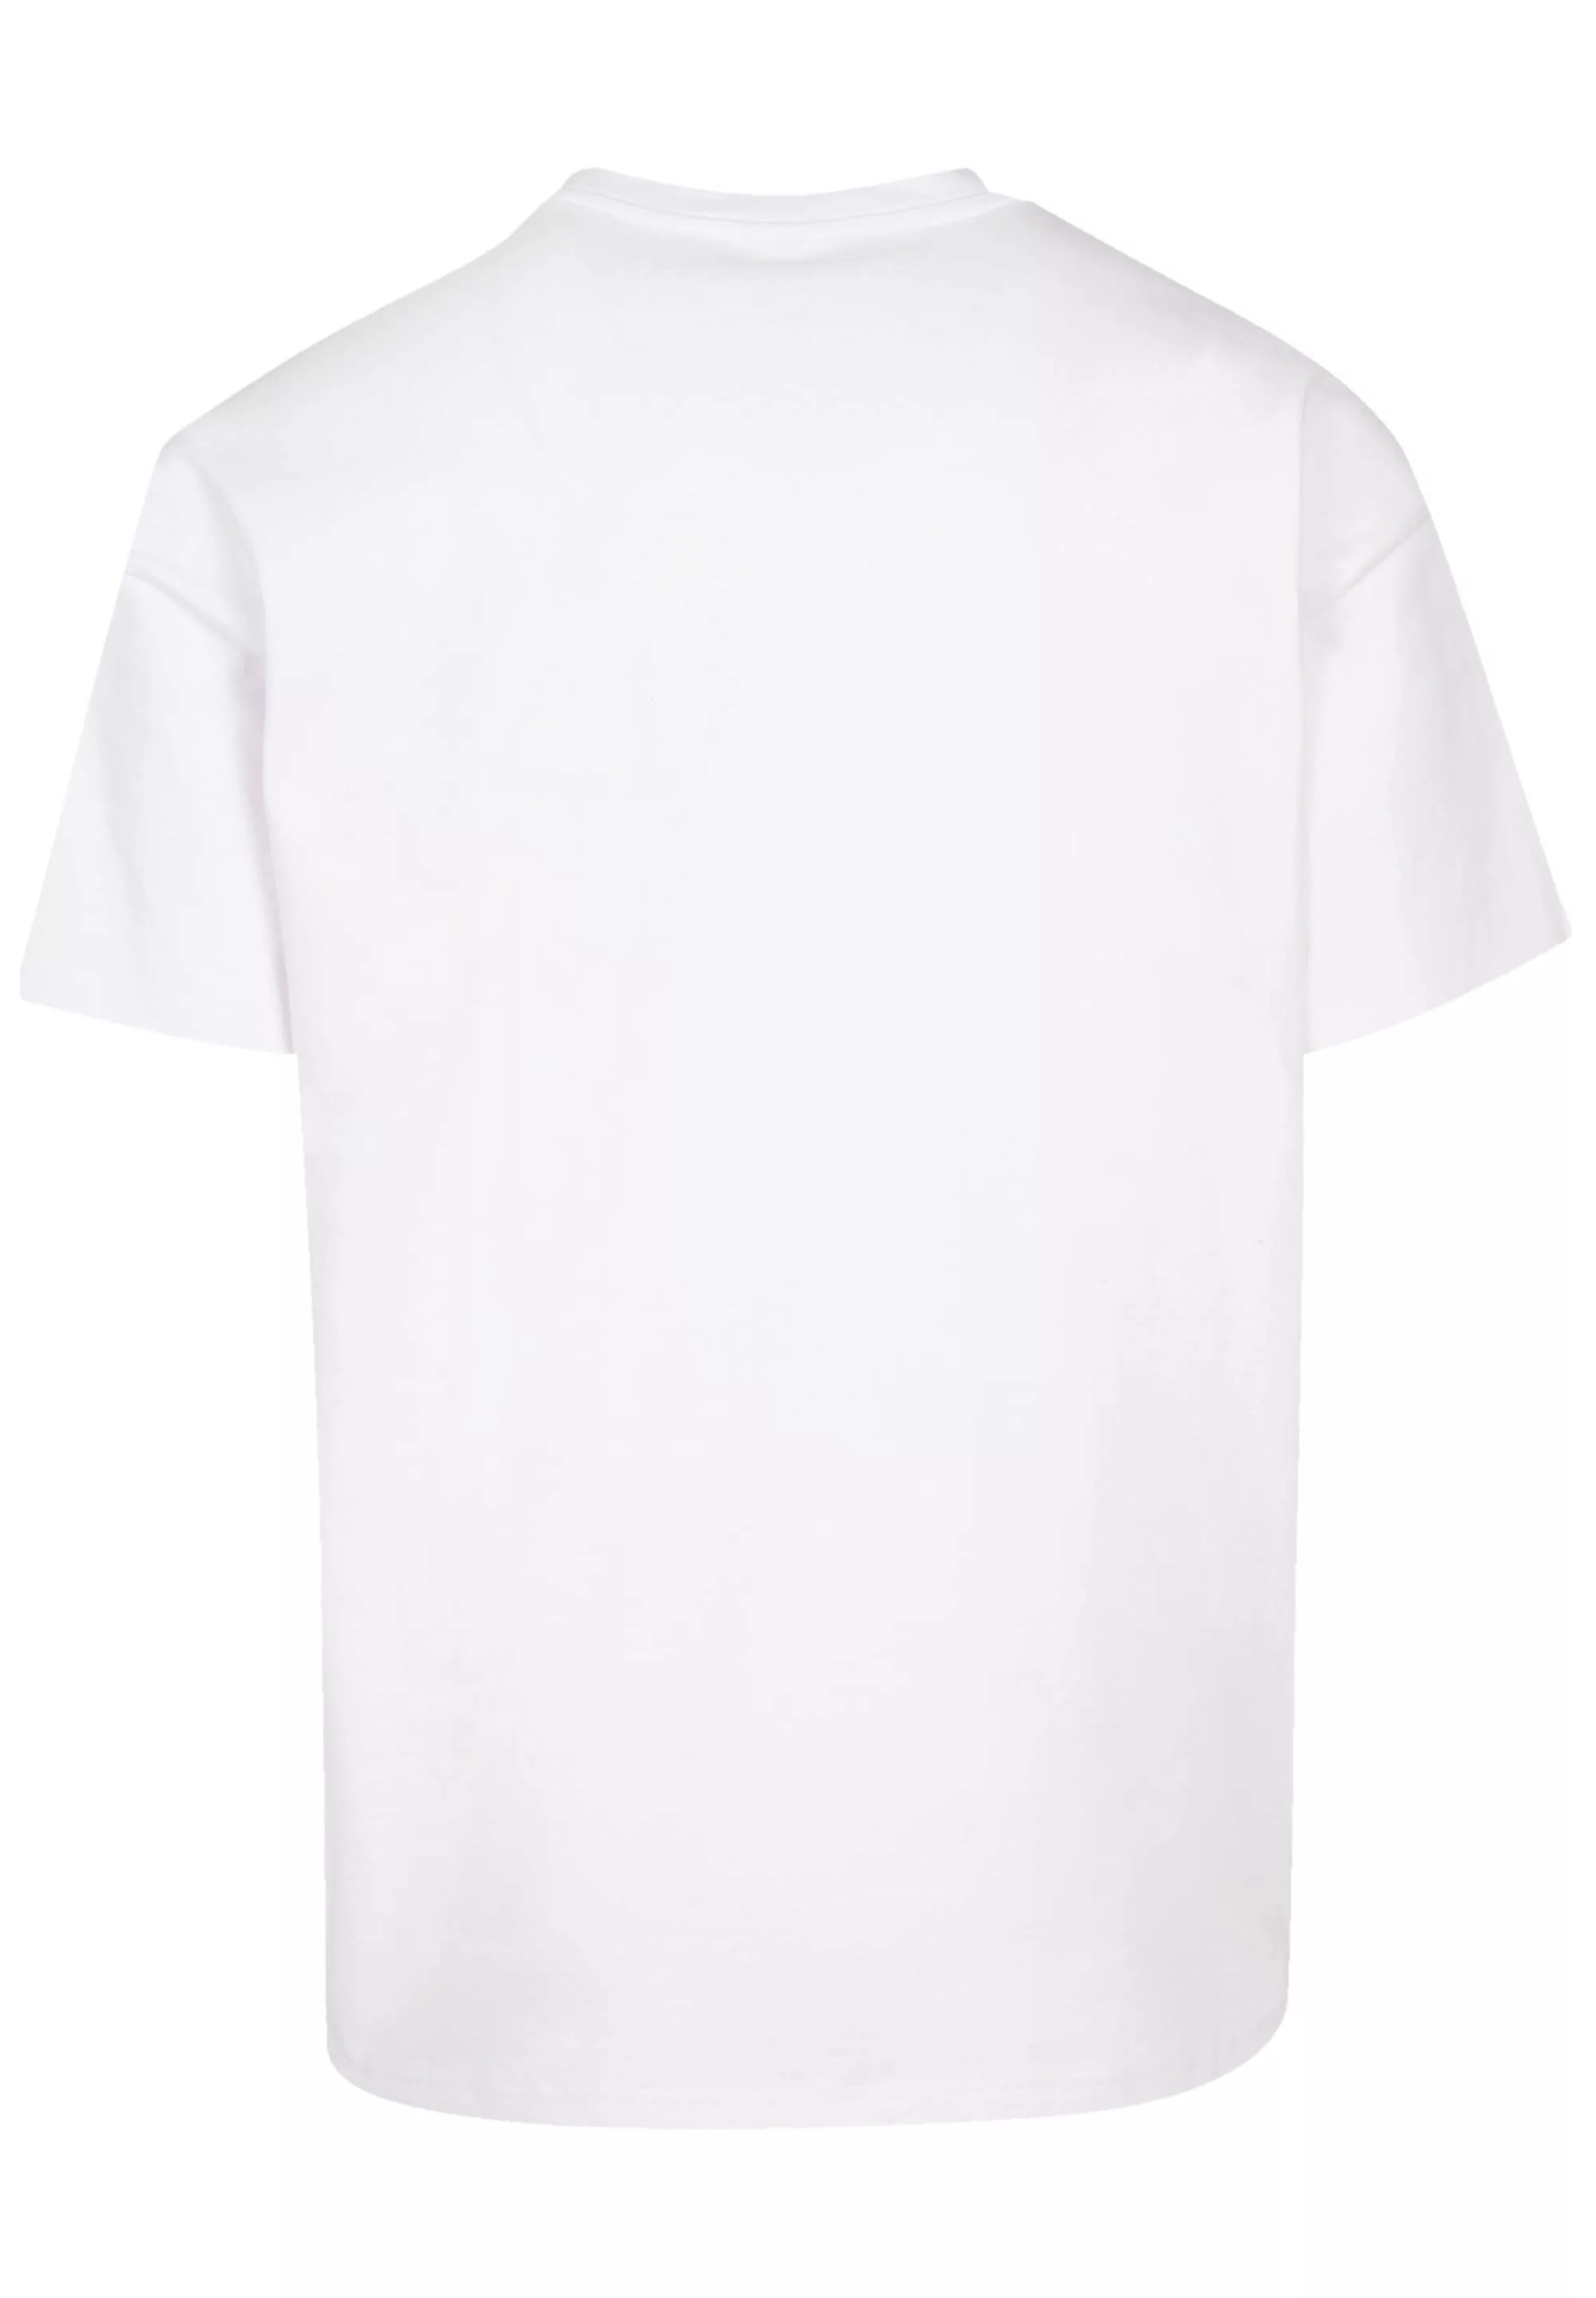 F4NT4STIC T-Shirt "Pink Floyd Animal Factory", Print günstig online kaufen